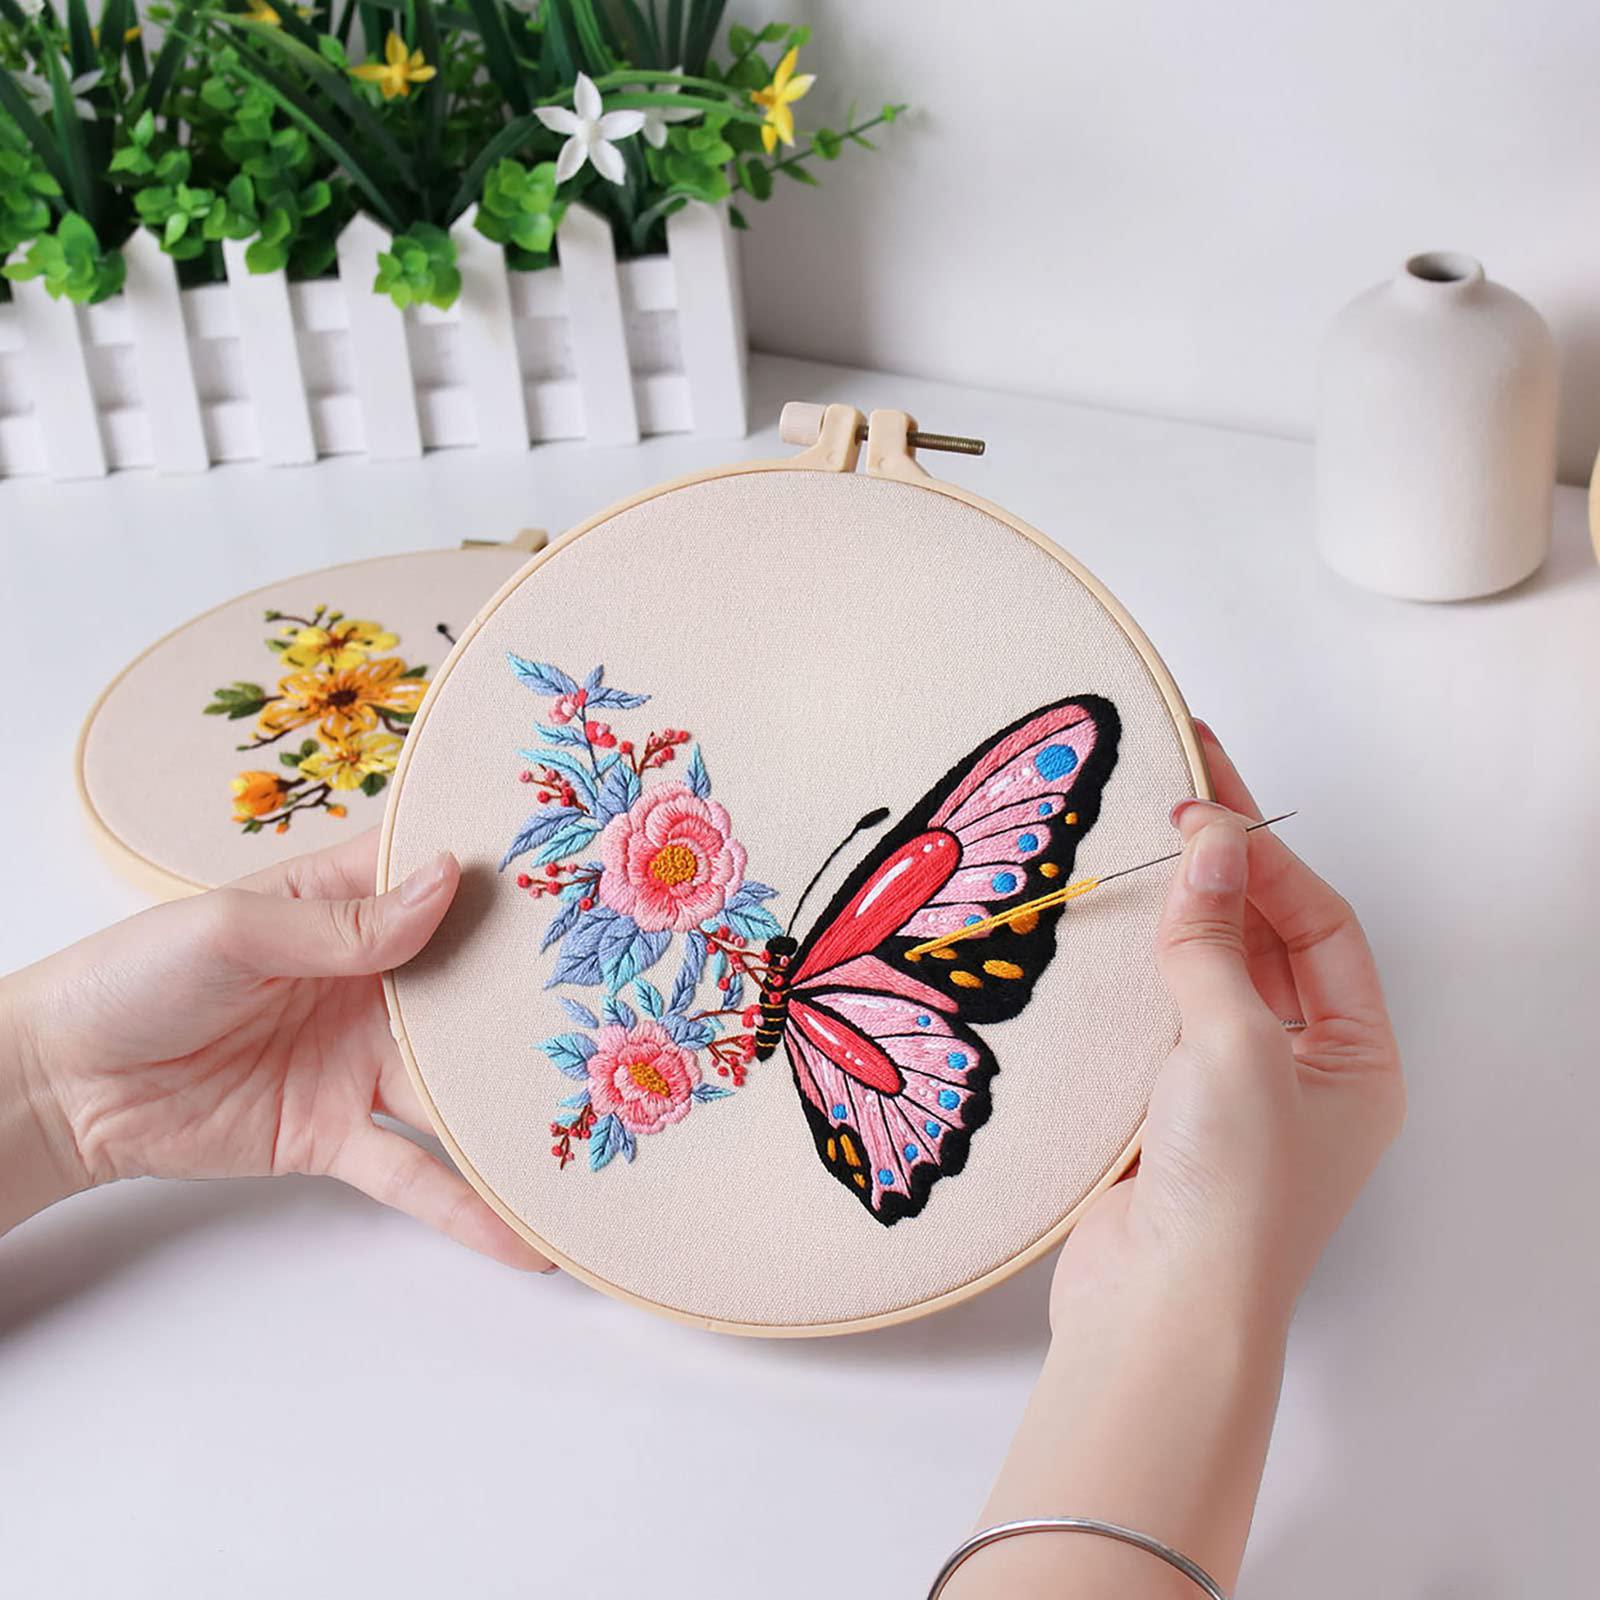 Konrisa konrisa embroidery starter kits with butterfly flower